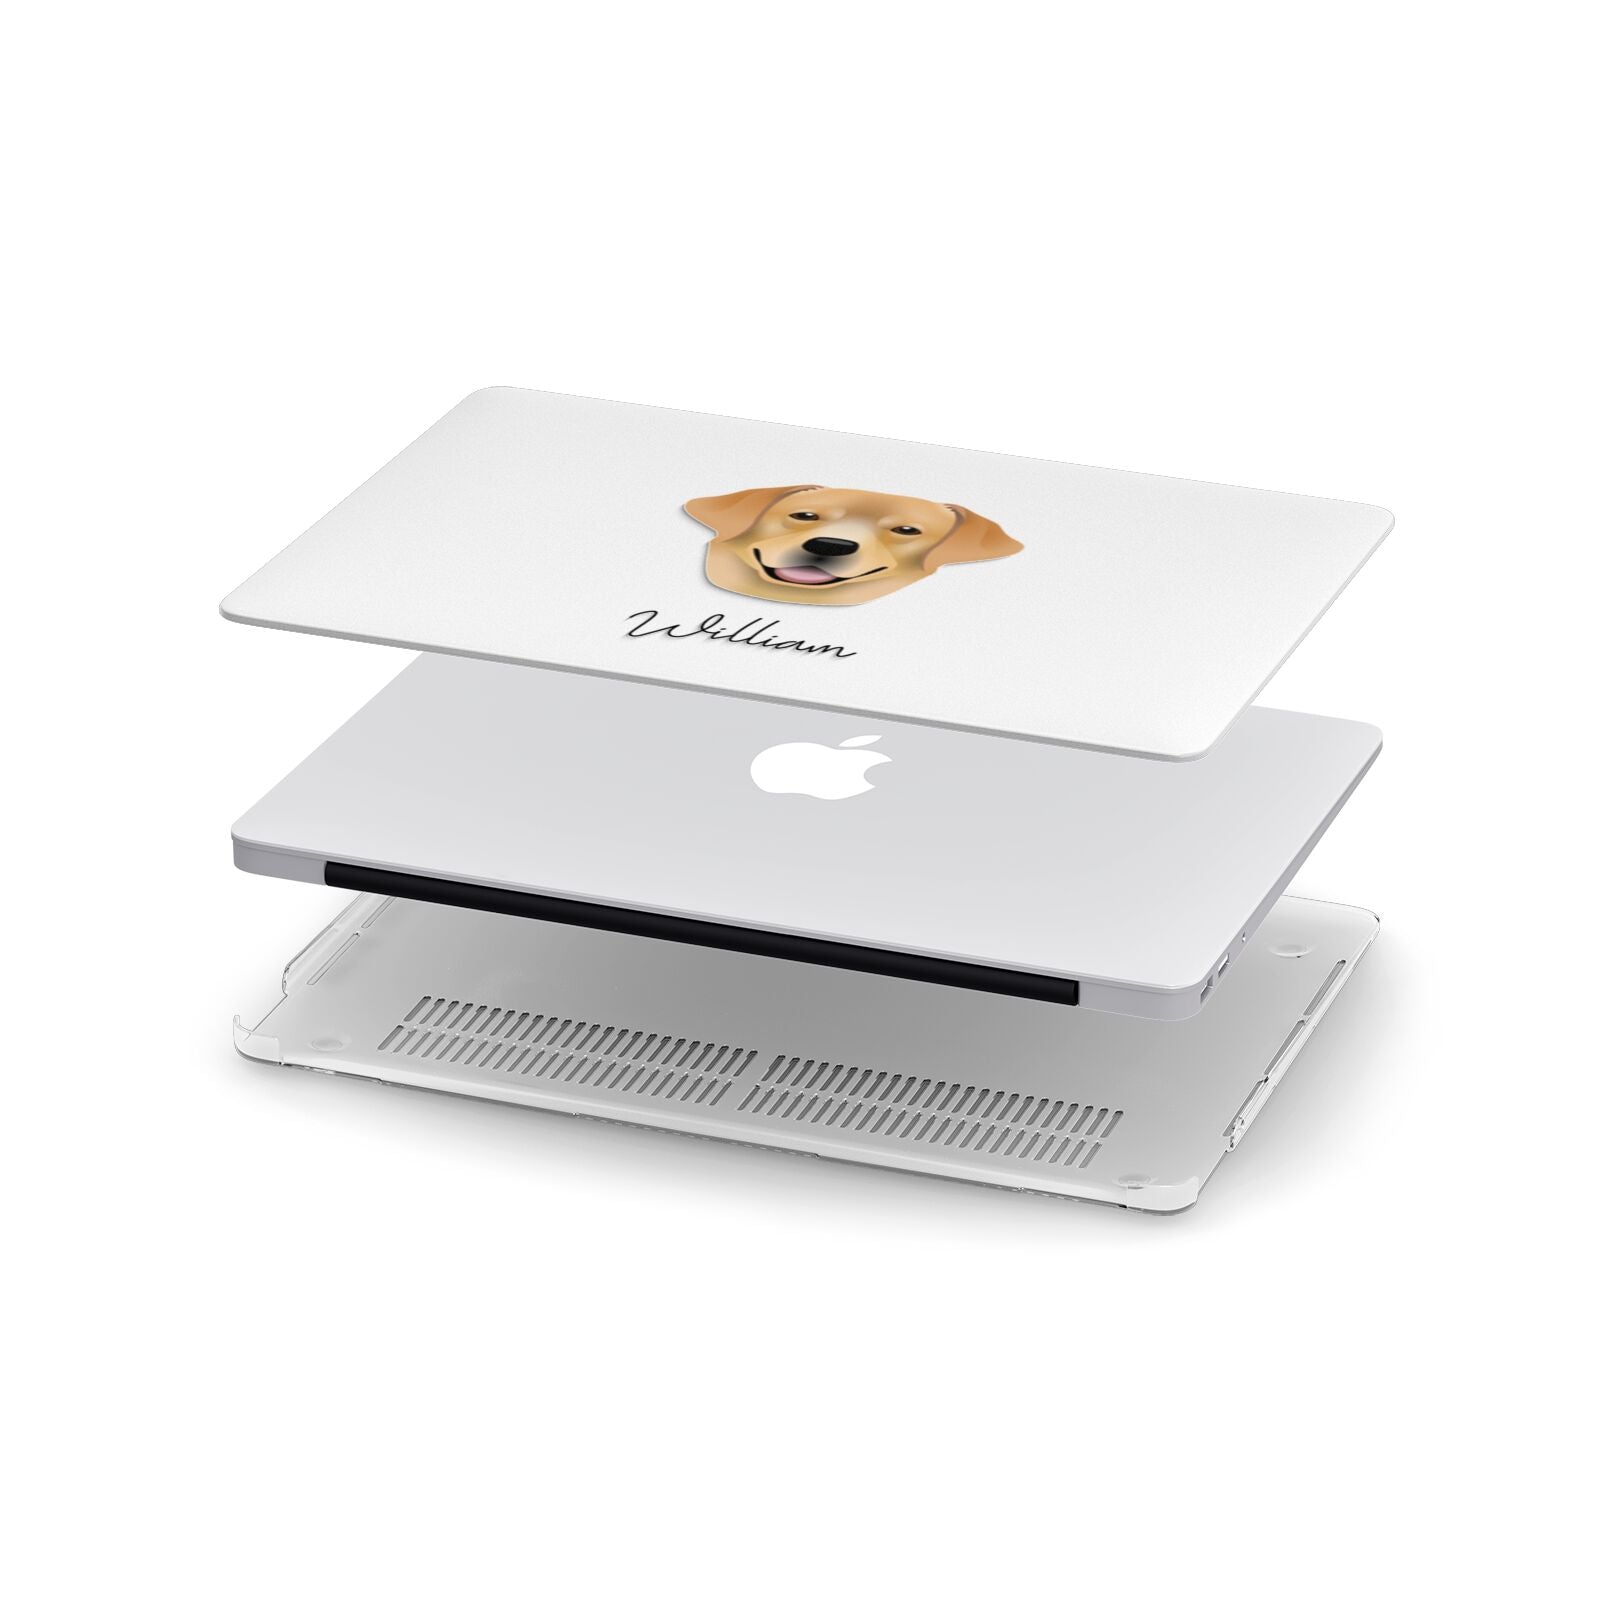 Labrador Retriever Personalised Apple MacBook Case in Detail